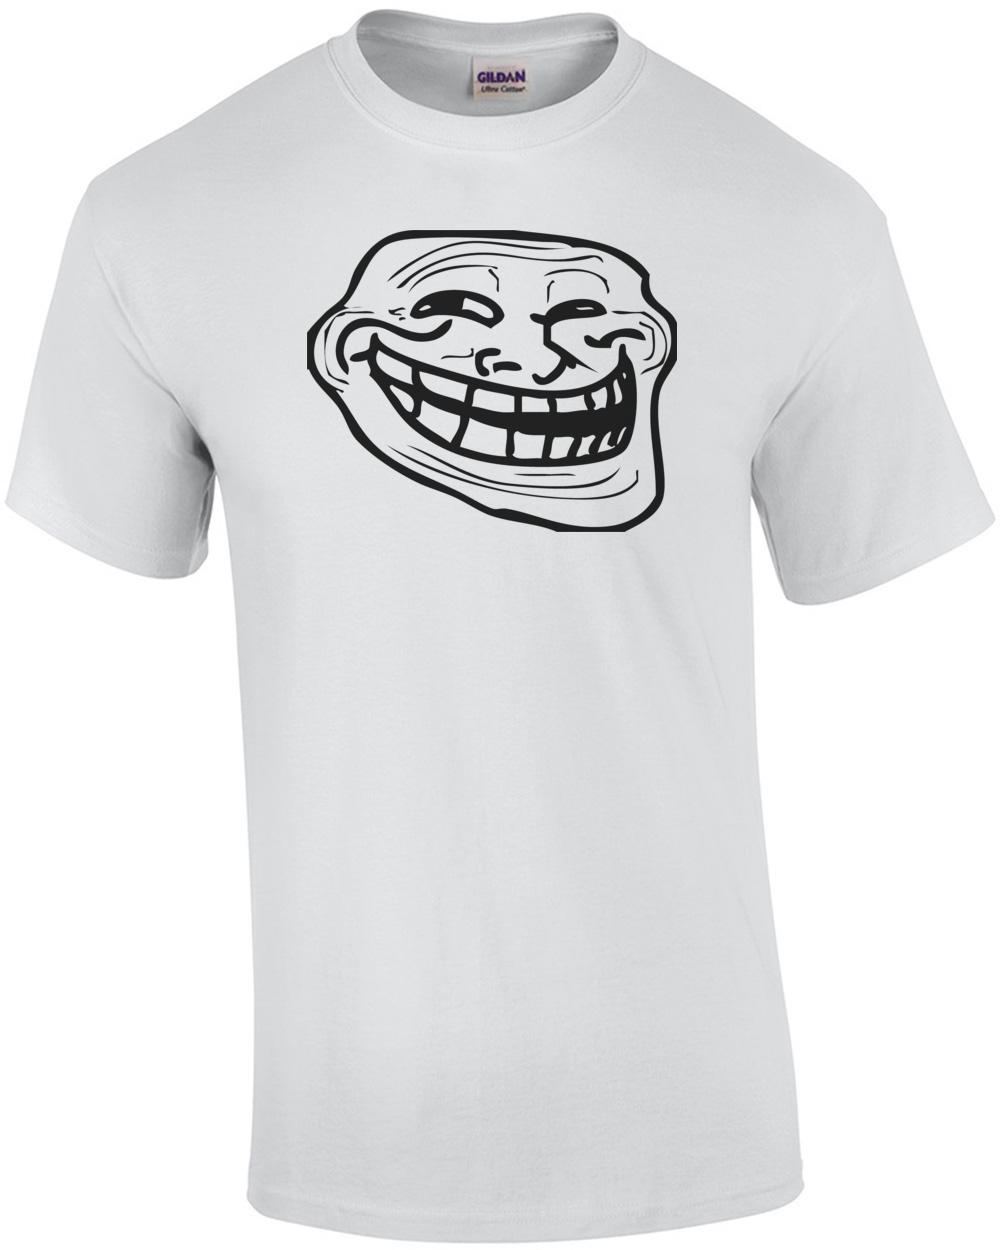 Troll Face Shirt -  Israel